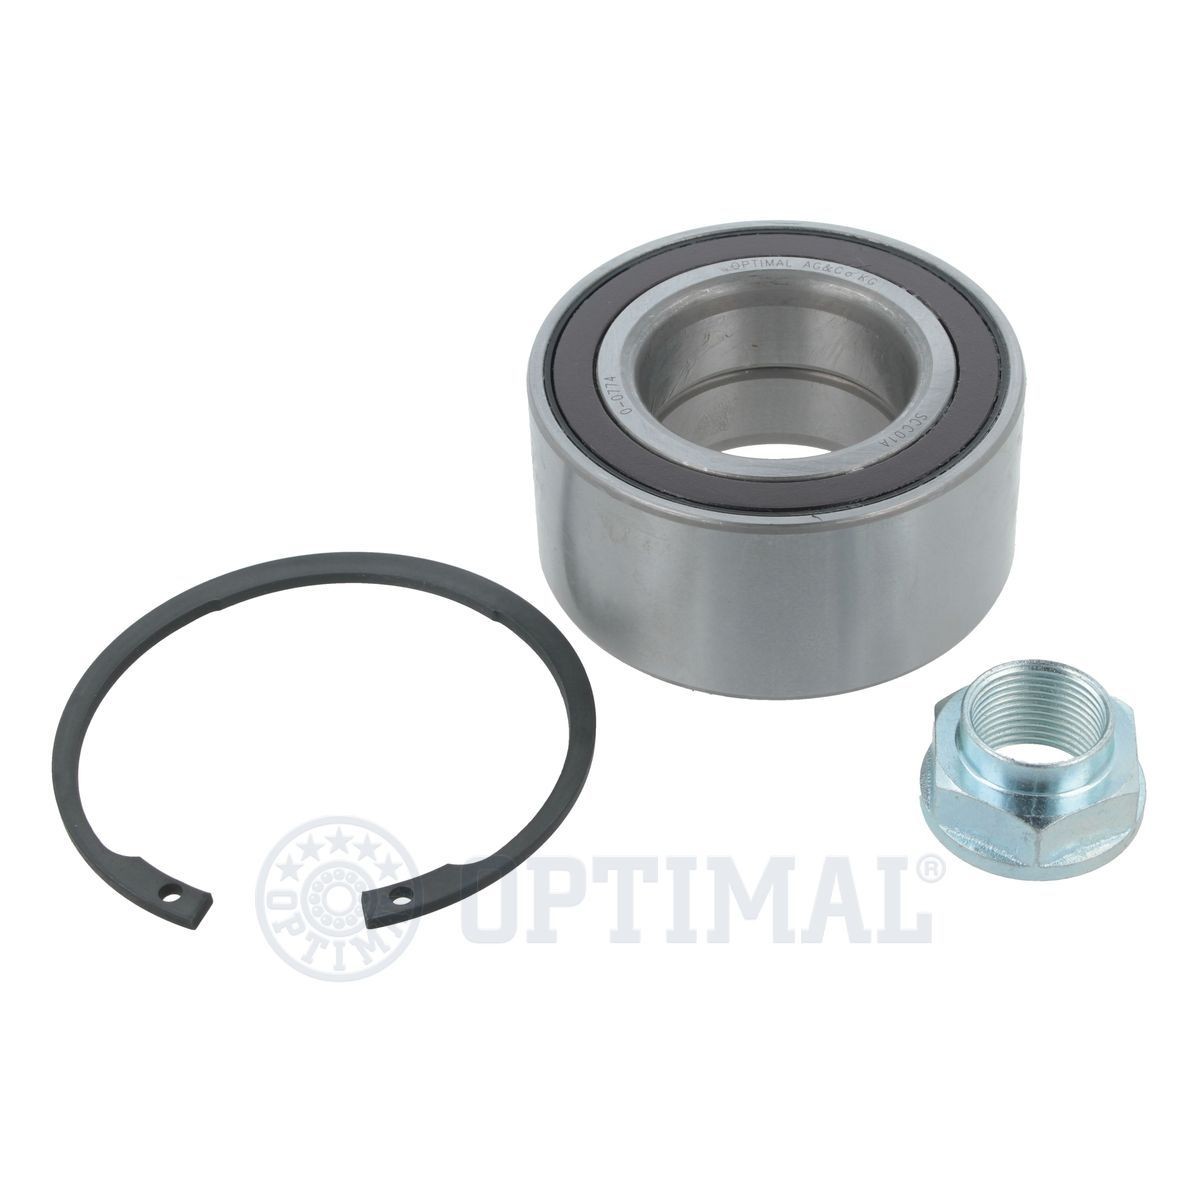 OPTIMAL 801829 Wheel bearing kit with integrated magnetic sensor ring, 84 mm